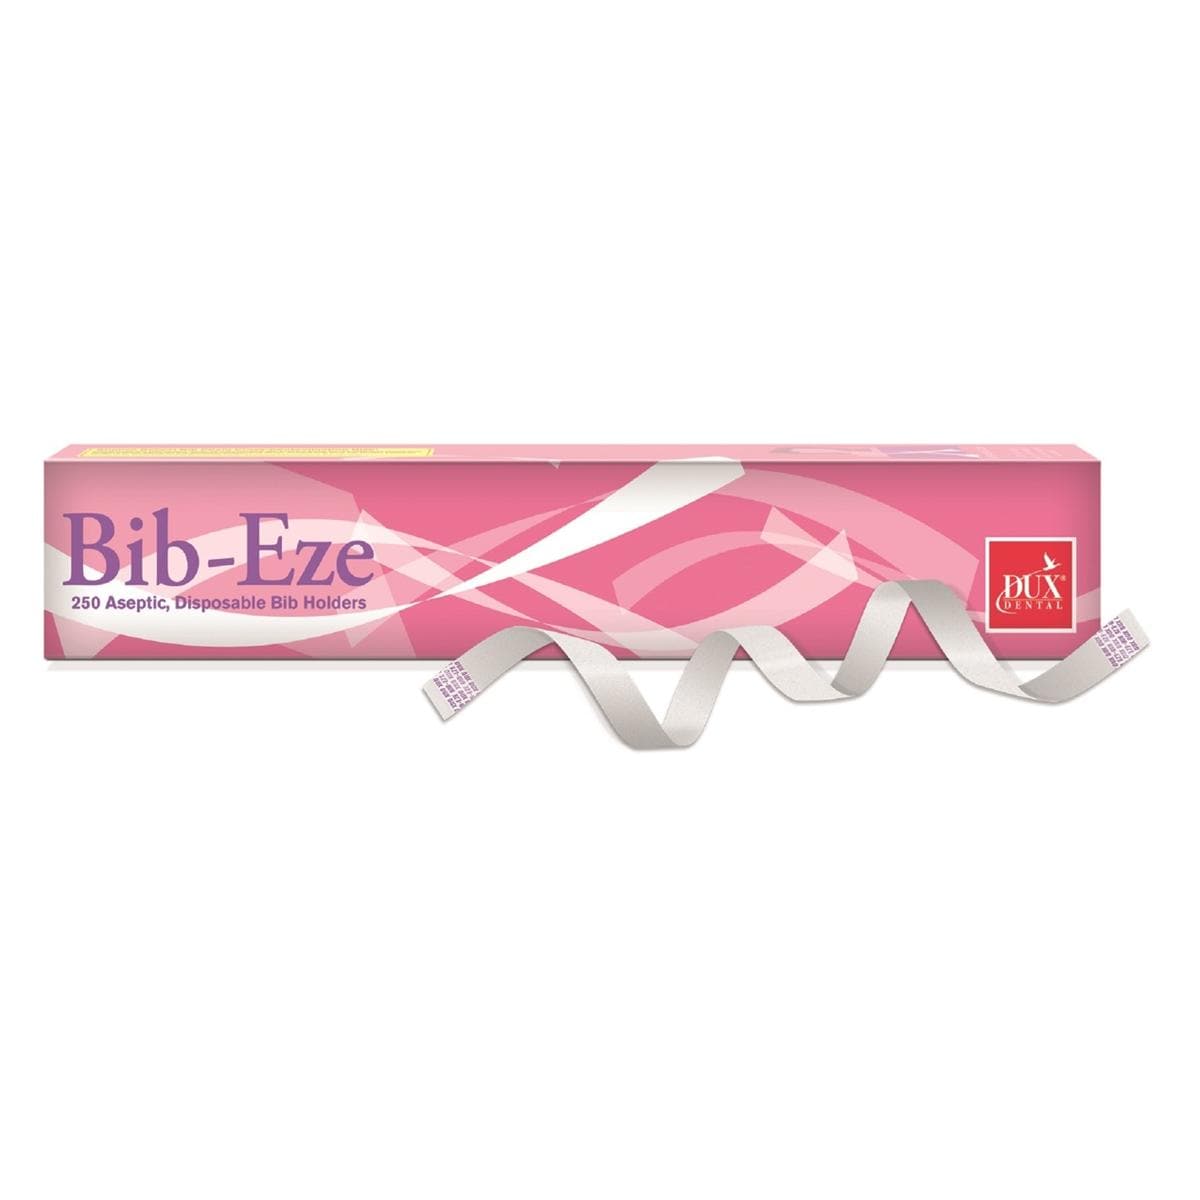 Bib-Eze - Par bote, 250 pcs